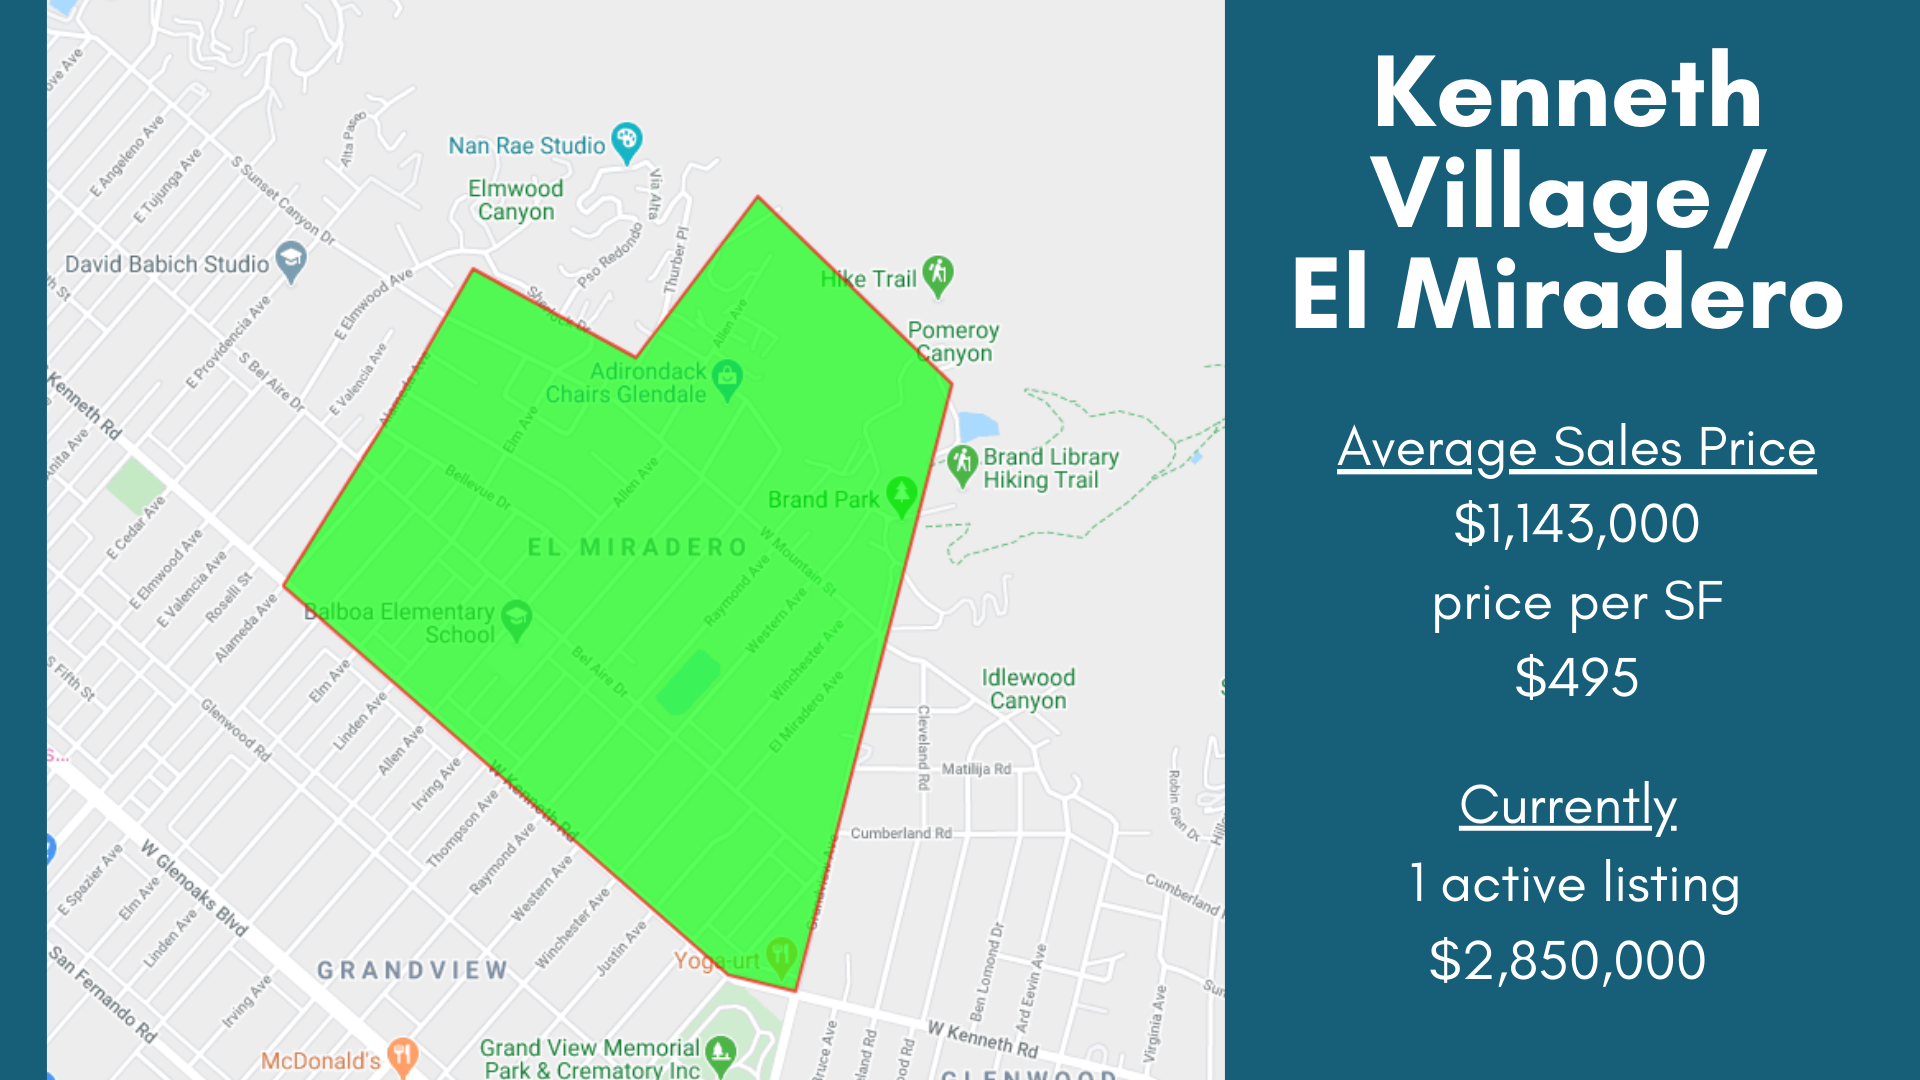 Kenneth Village/El Miradero Neighborhood Map, Glendale California